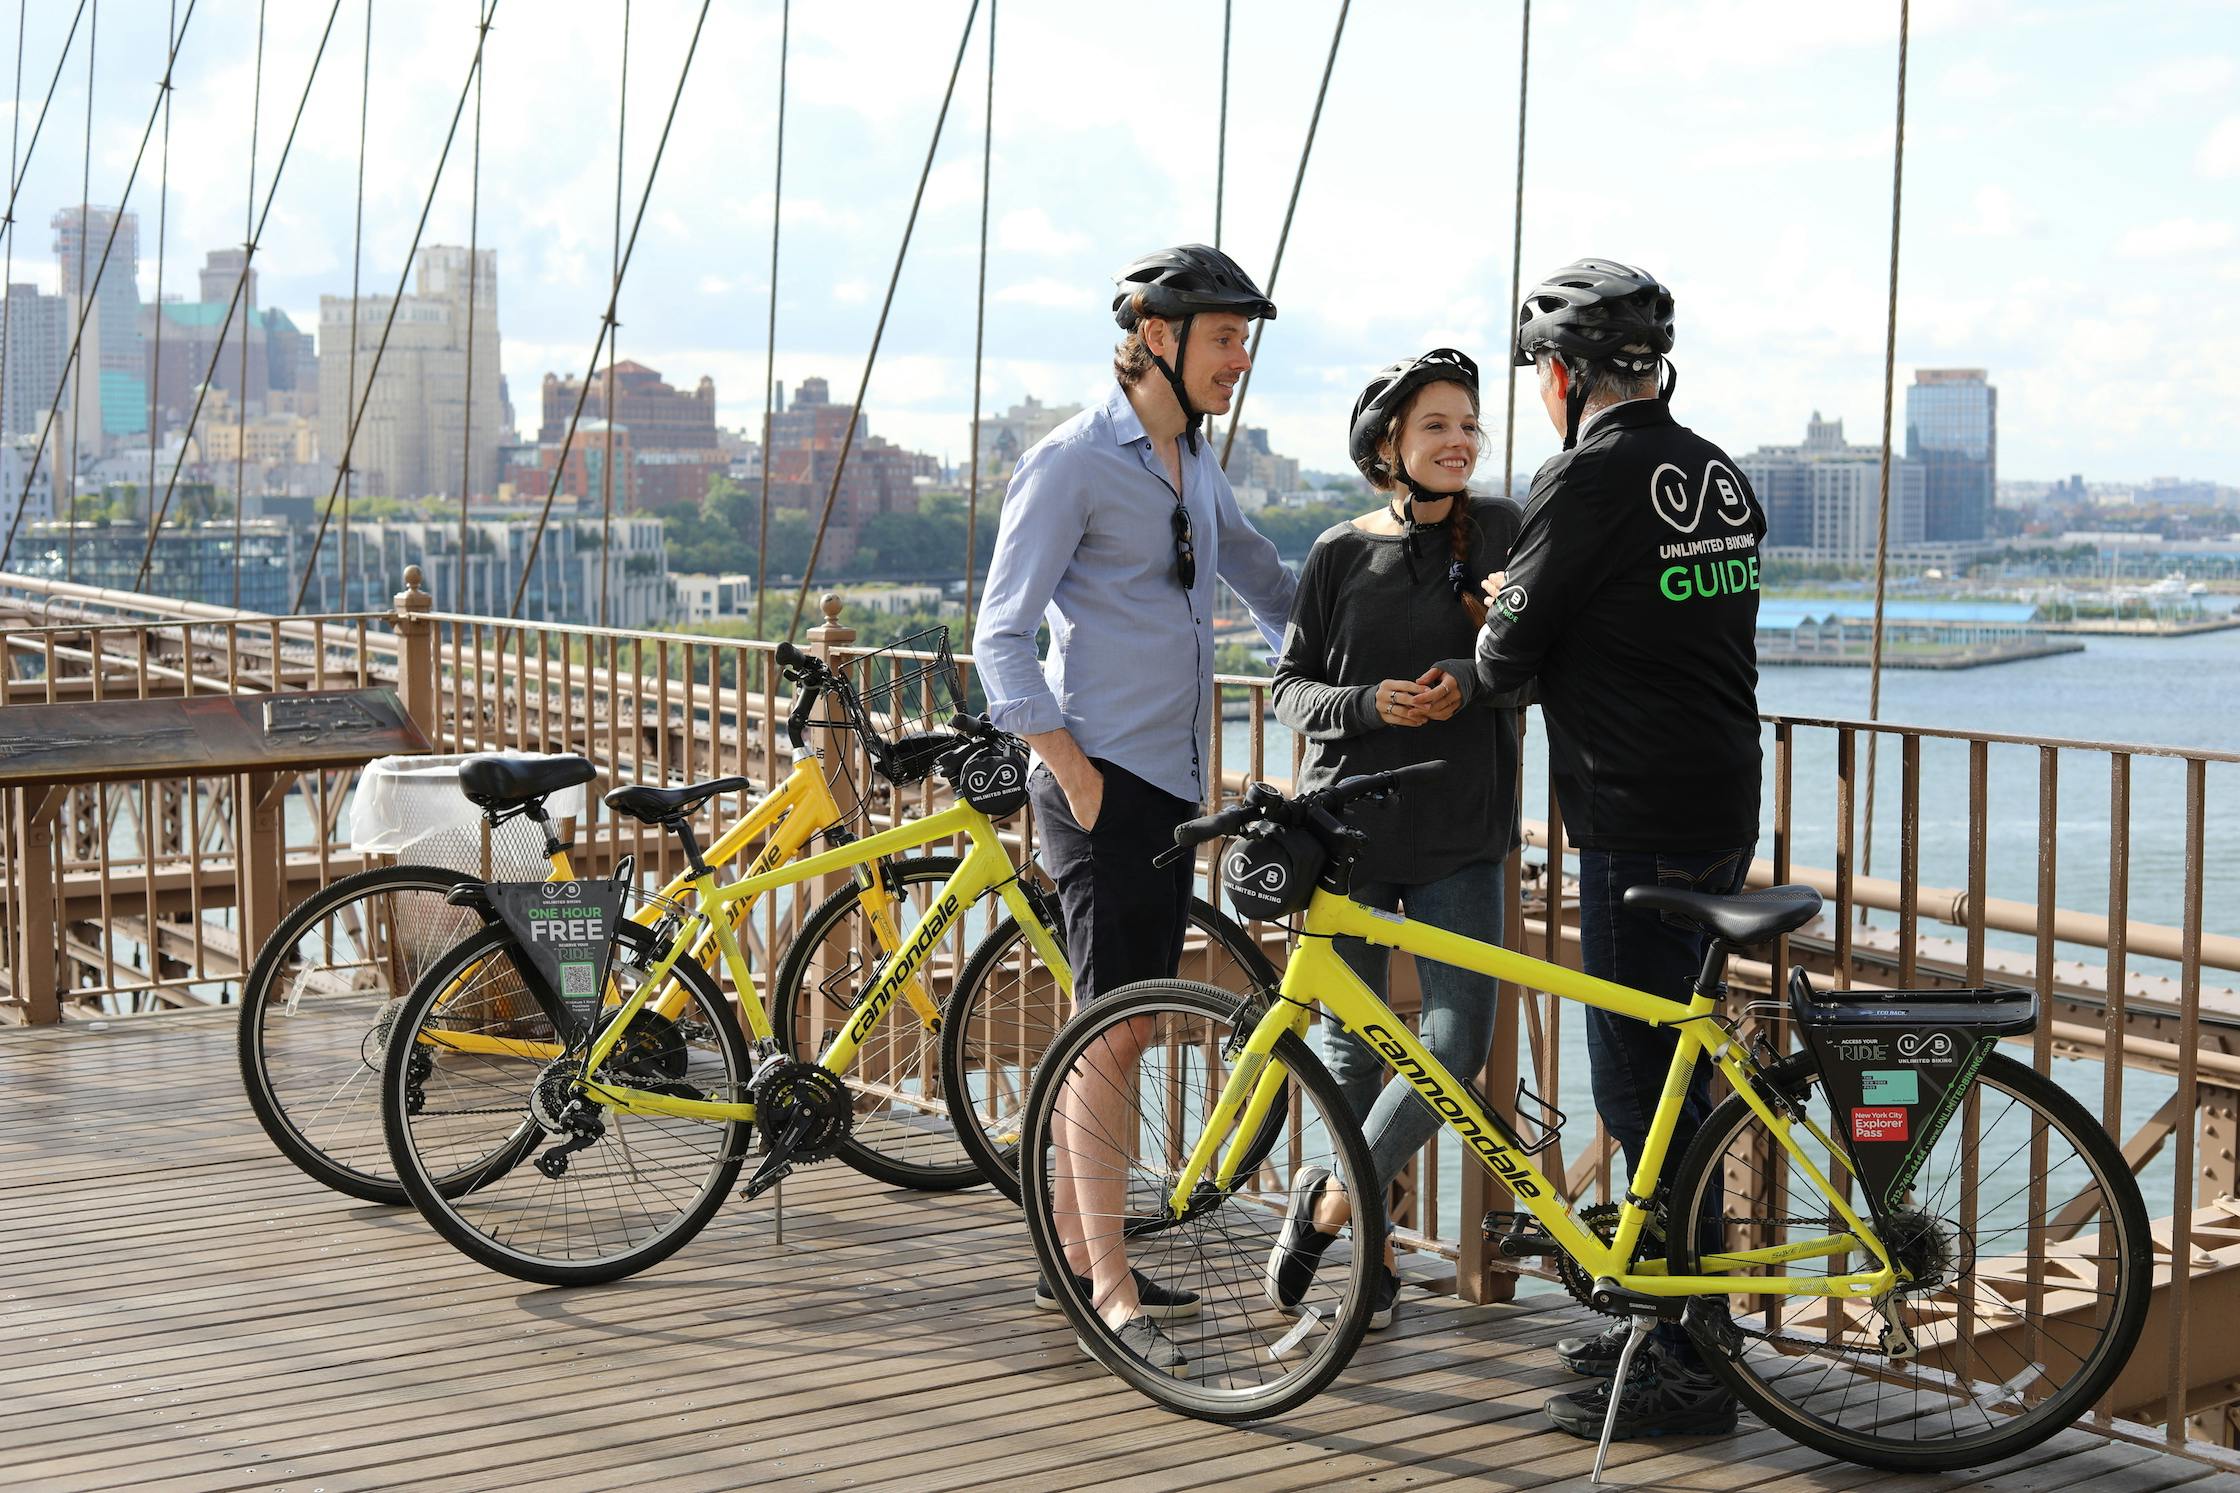 Tour in bici del ponte di Brooklyn